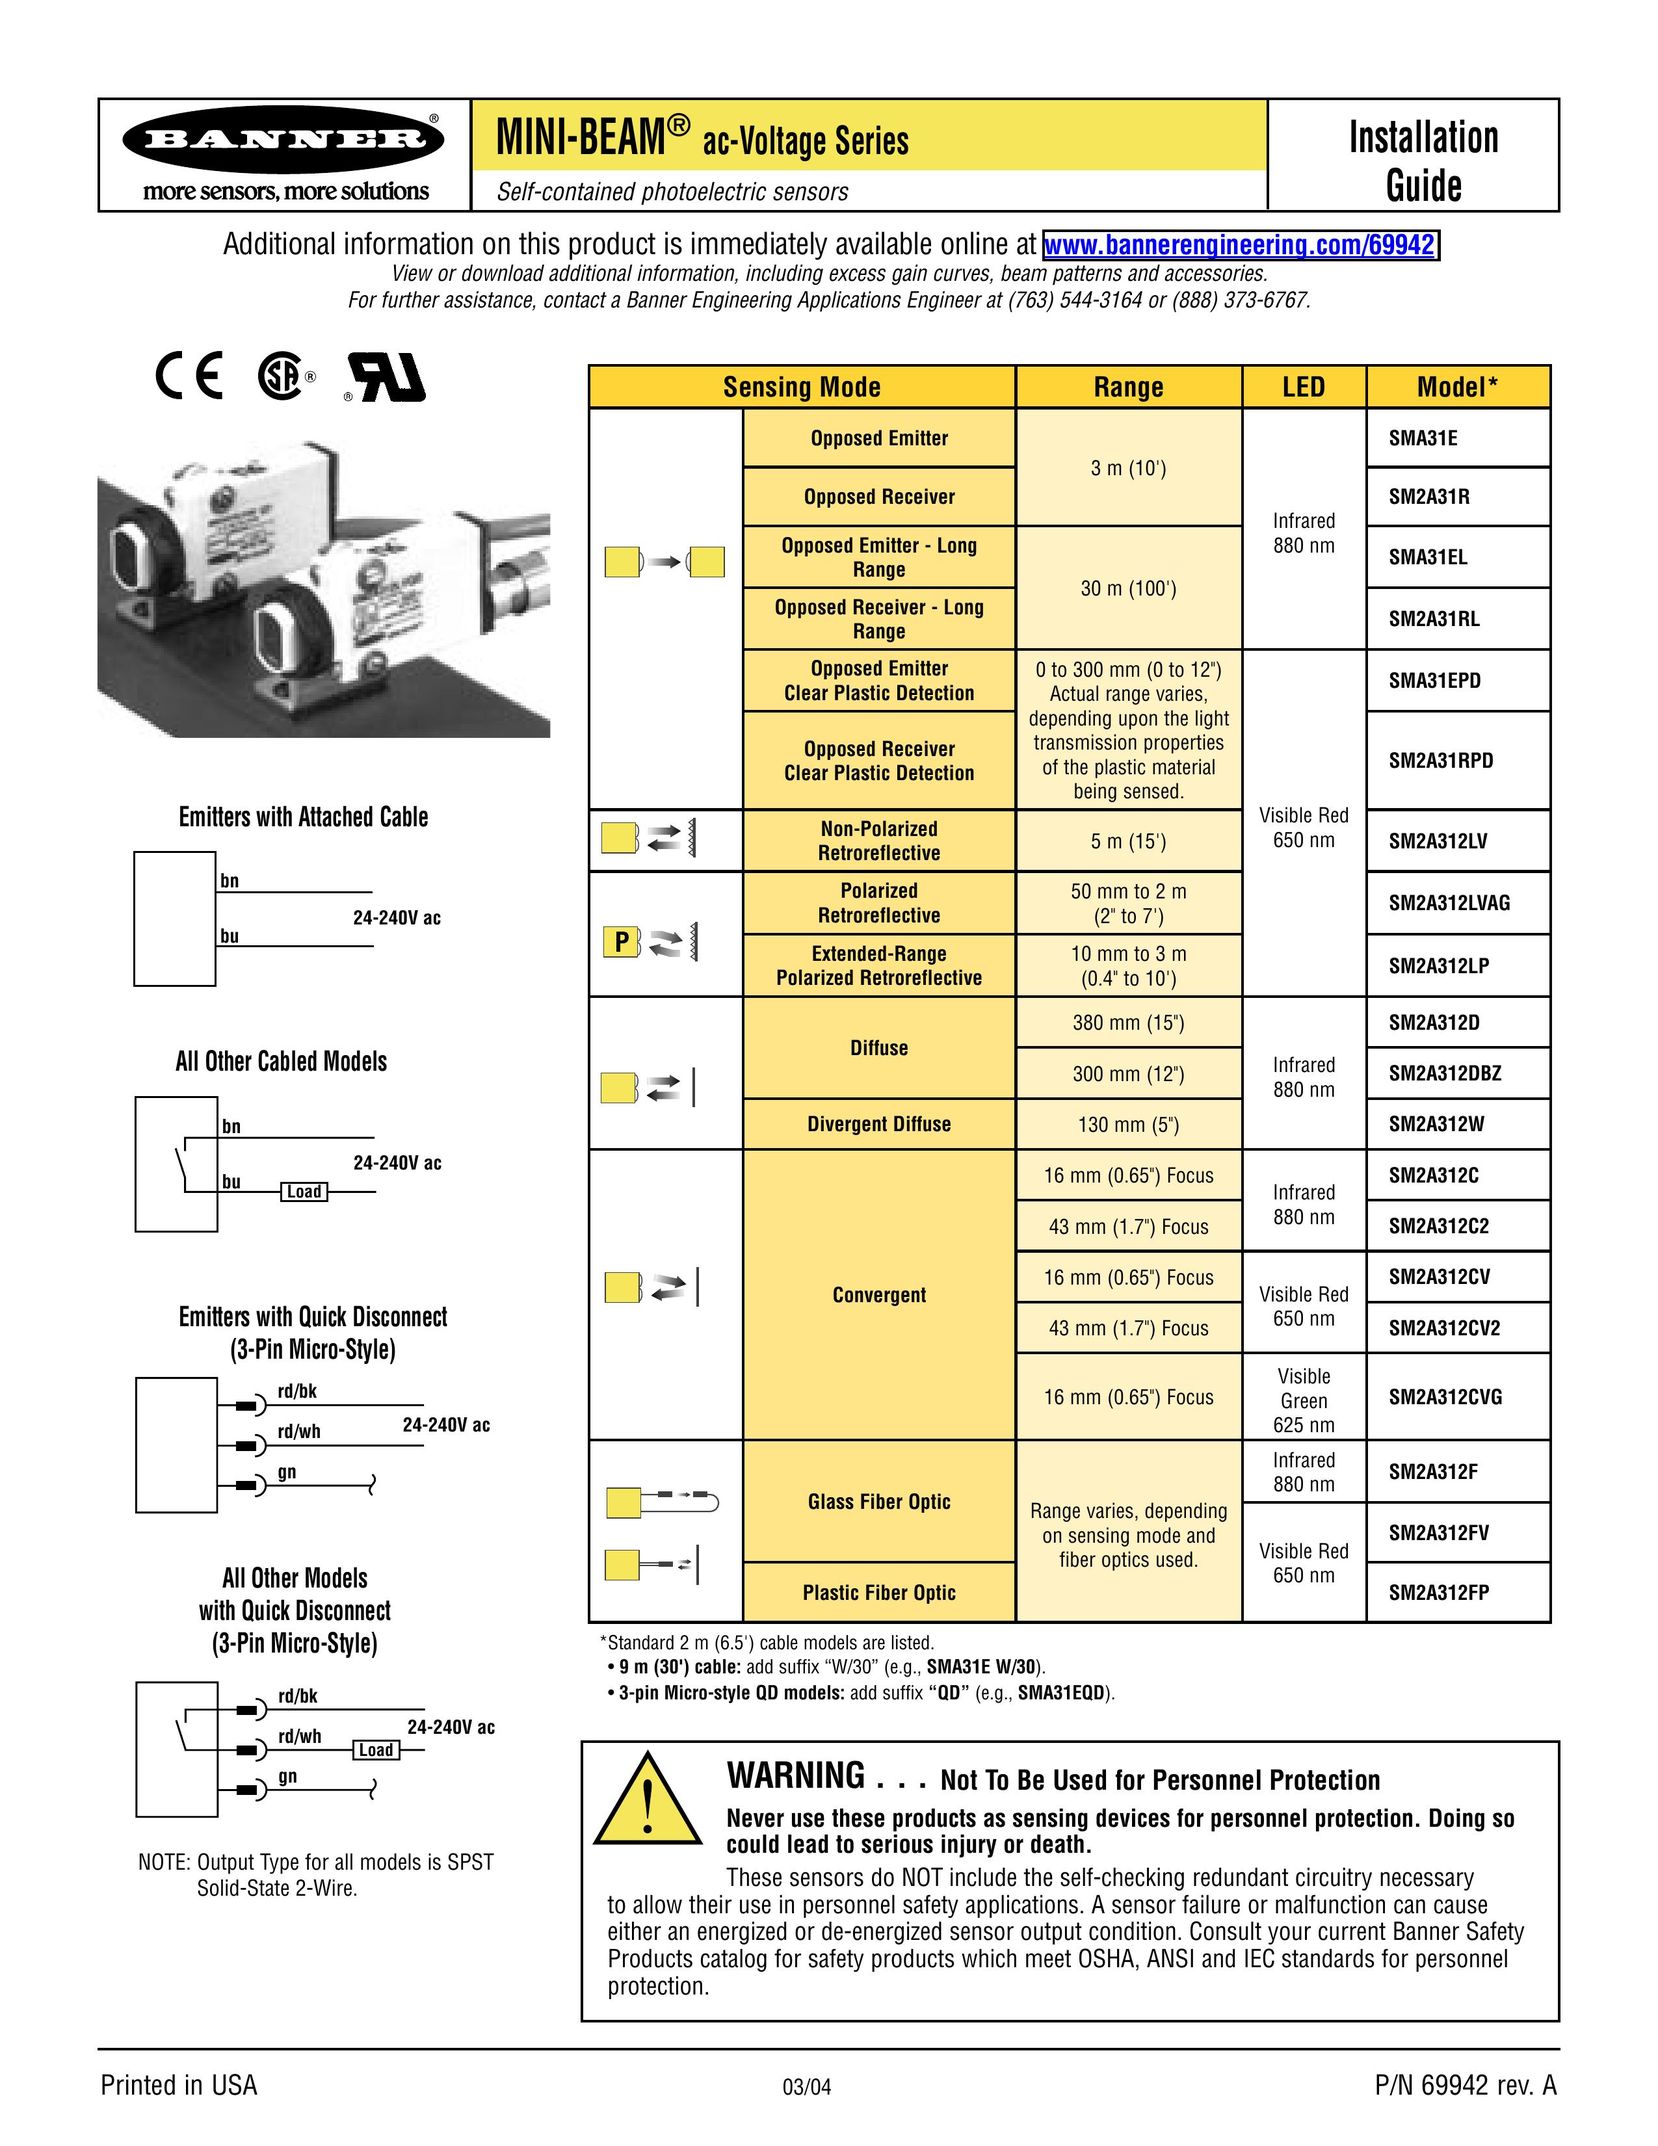 Banner ac-Voltage Series Stud Sensor User Manual